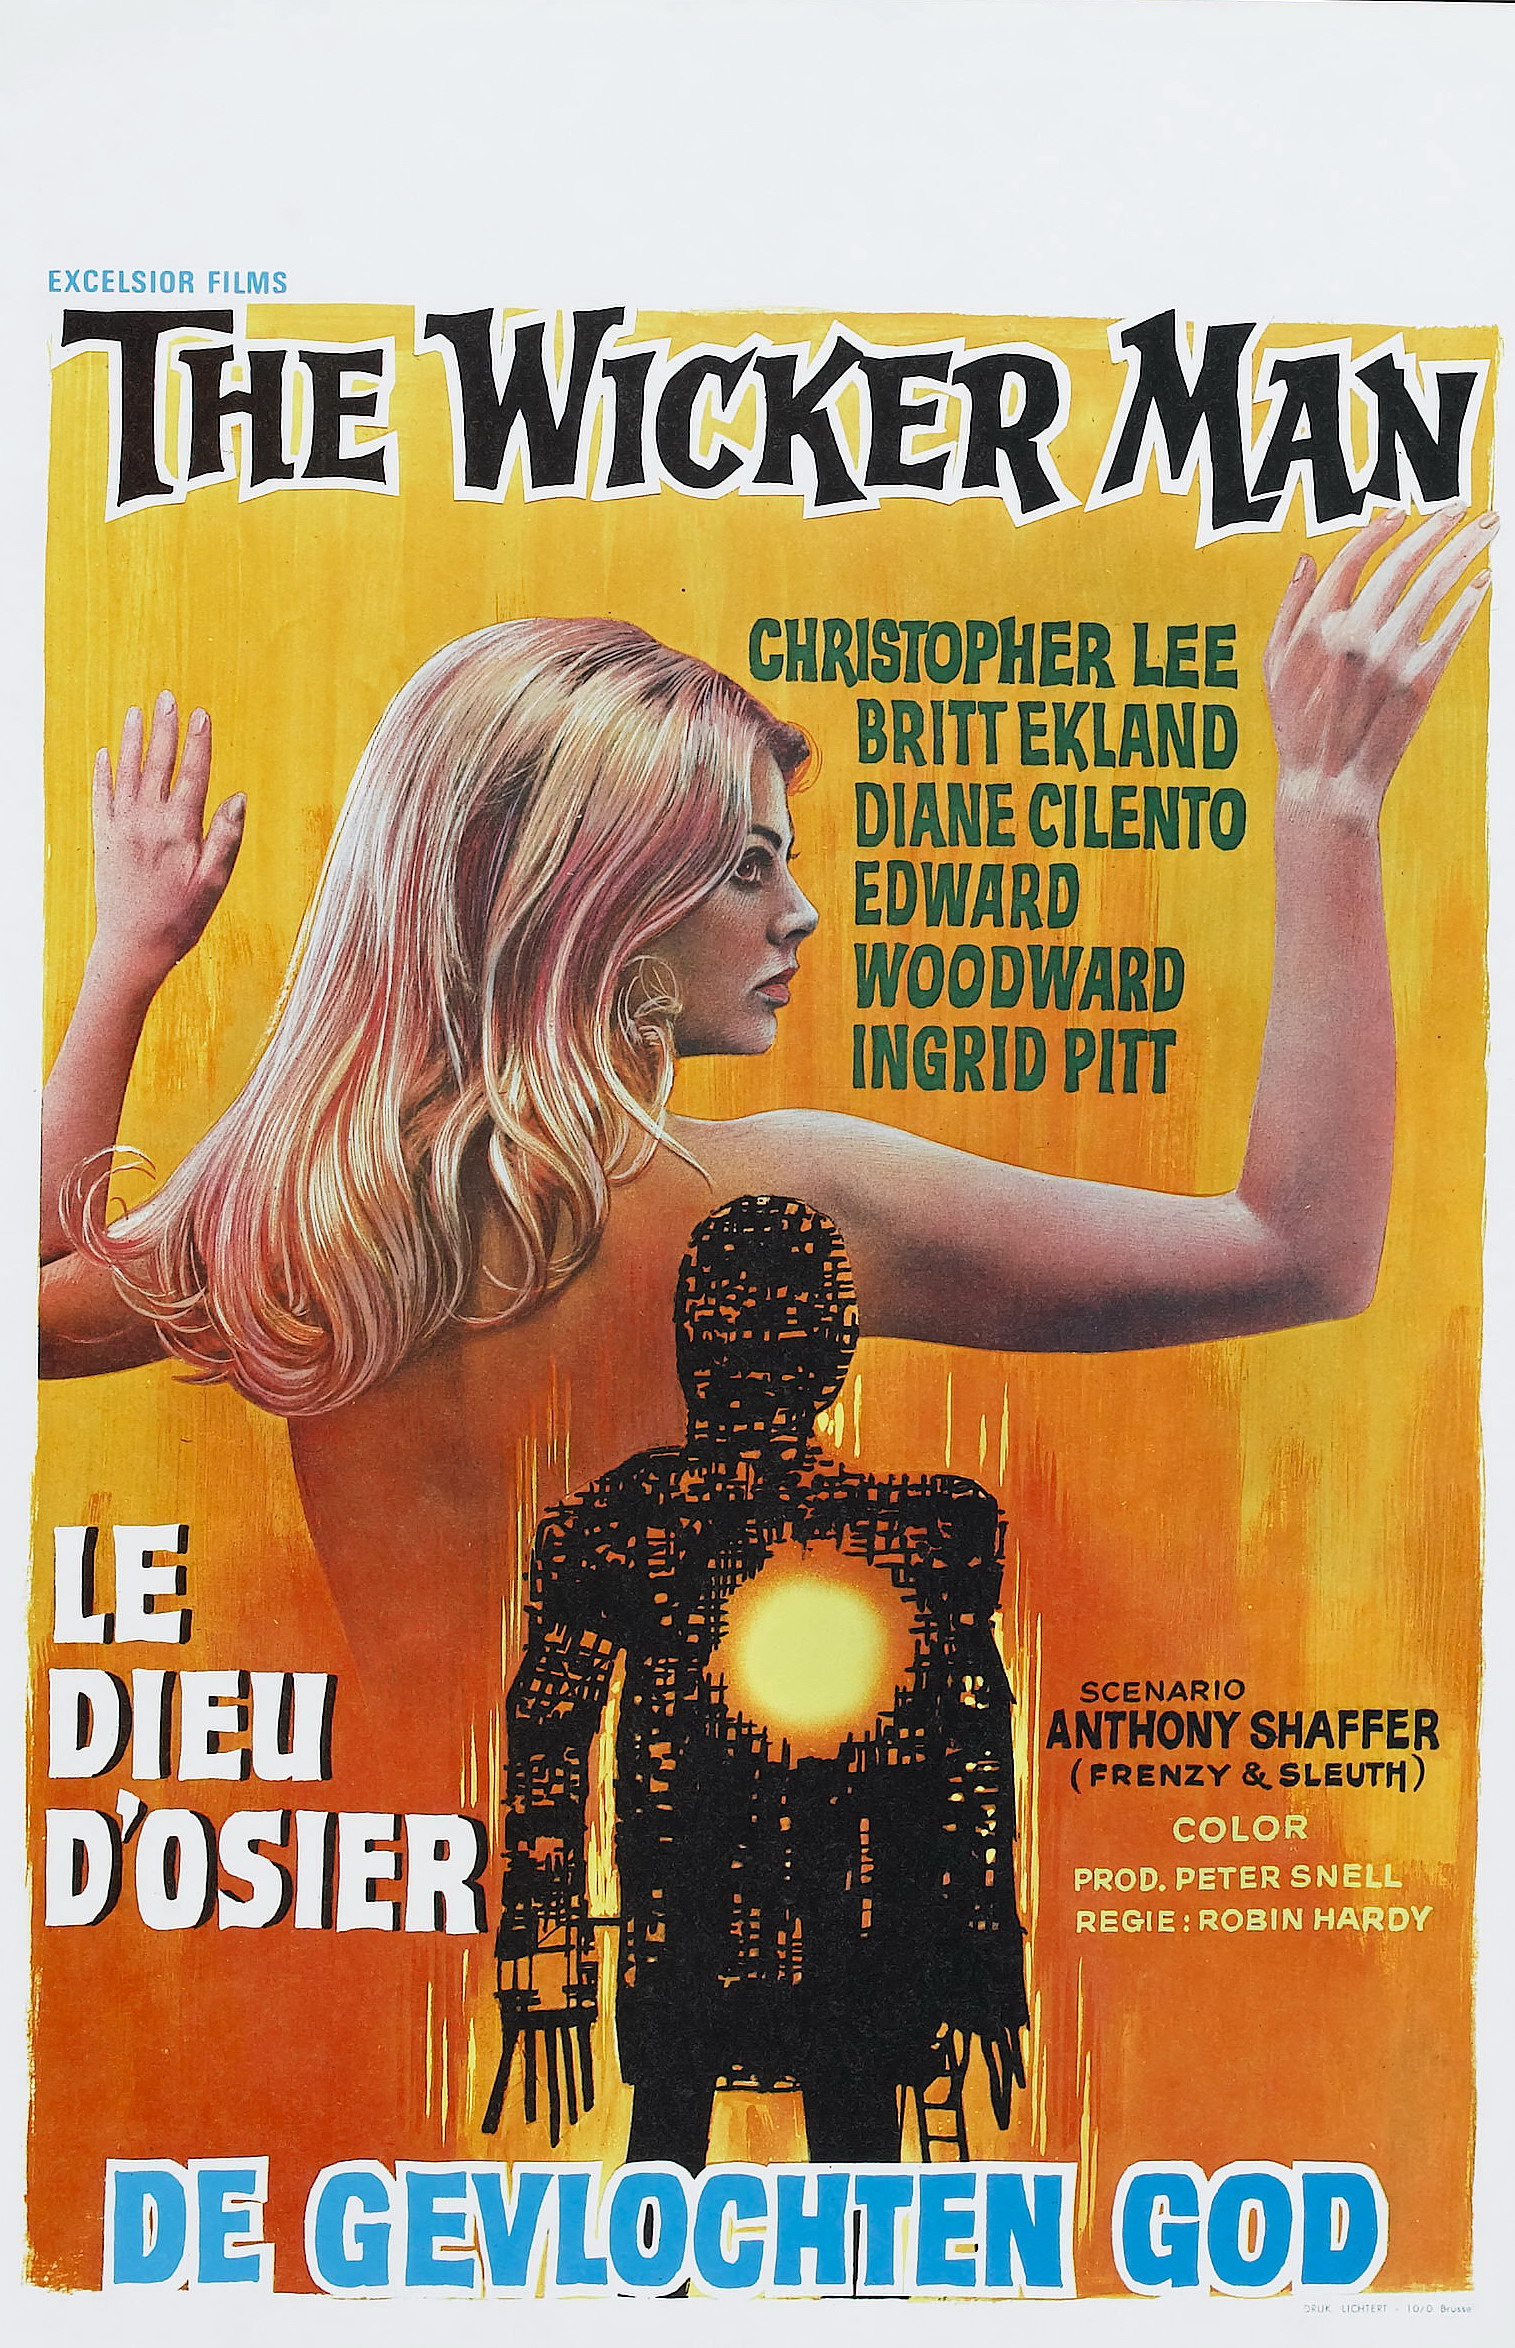 Плетеный человек (The Wicker Man - 1973, режиссер Робин Харди)